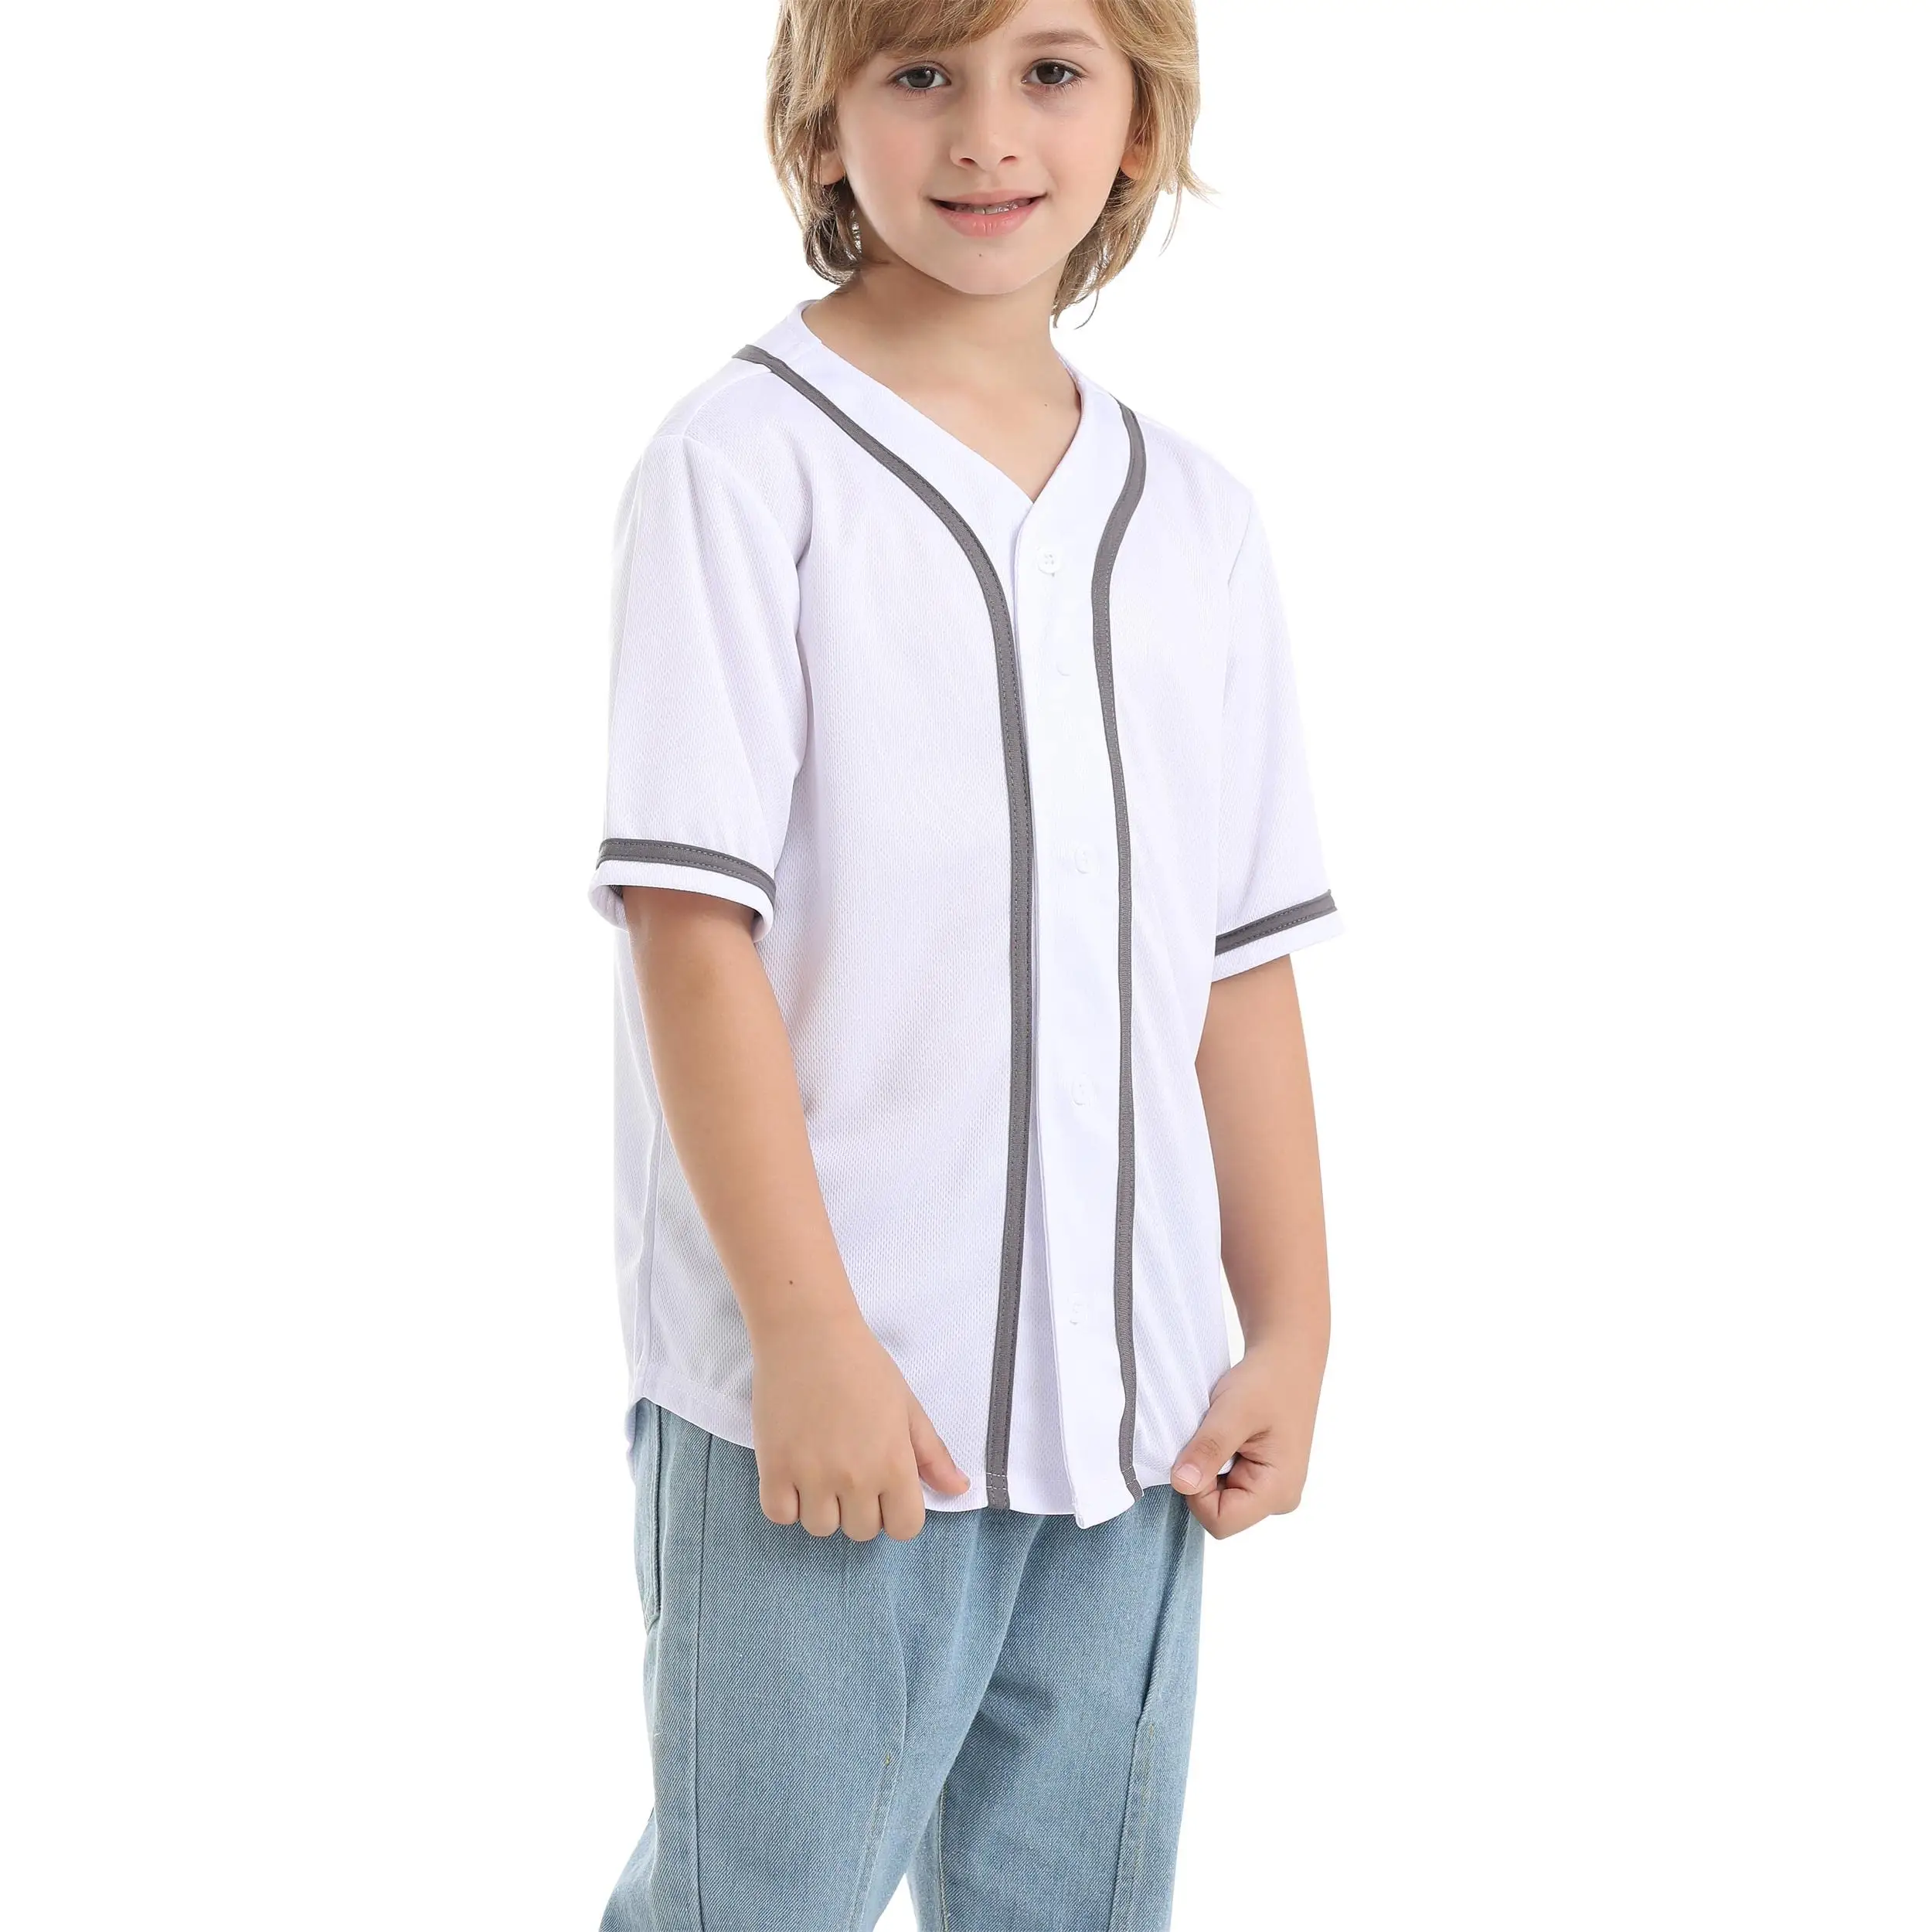 Kaus bisbol anak laki-laki dan perempuan, t-shirt Hip Hop berkancing bawah untuk anak laki-laki dan perempuan